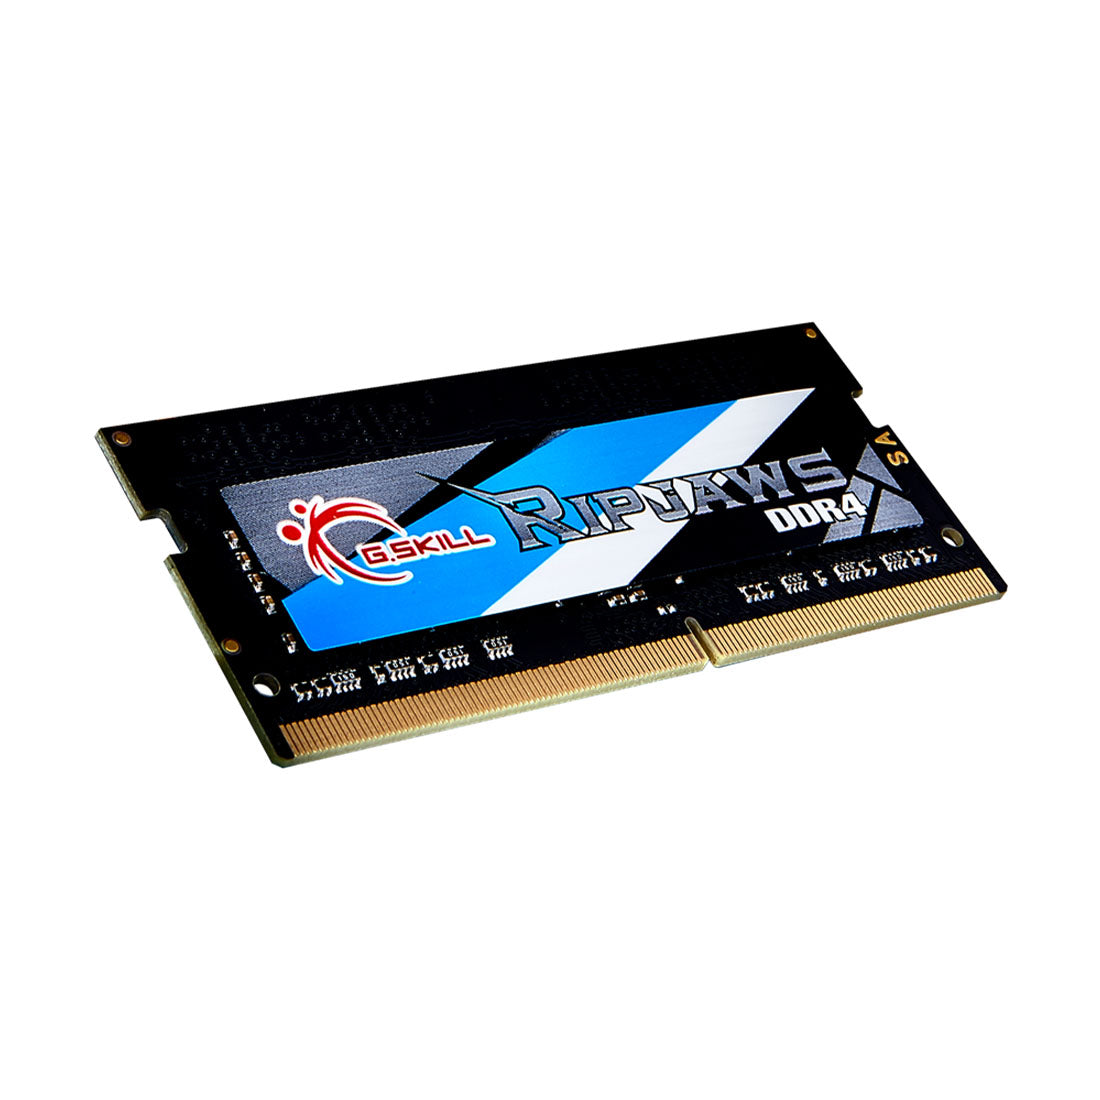 G.SKILL Ripjaws RAM DDR4 2666MHz लैपटॉप मेमोरी